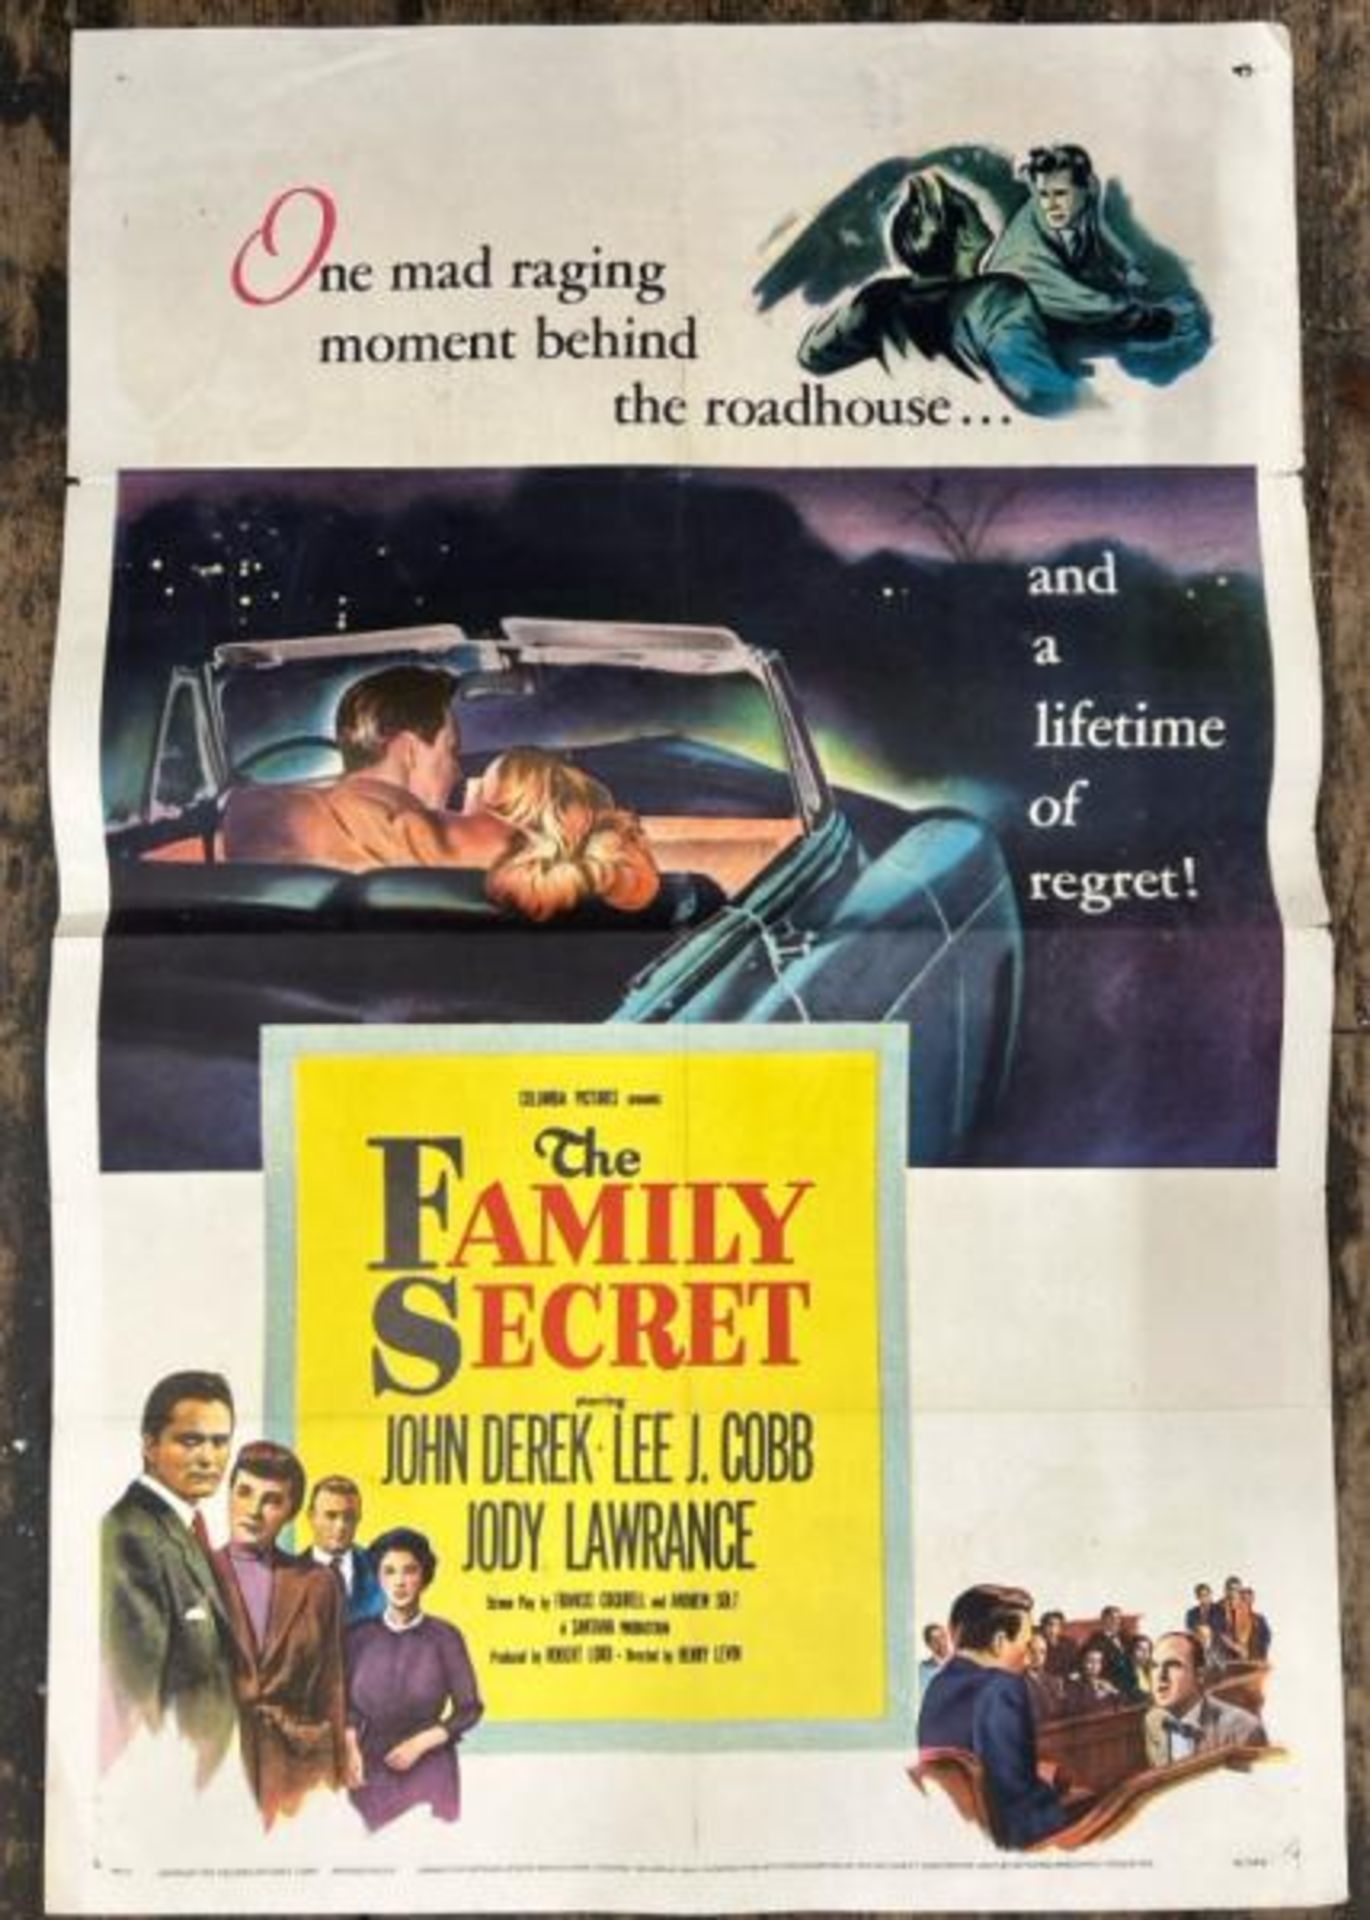 THE FAMILY SECRET ORIGINAL FILM POSTER, 51/356, PRINTED IN THE USA, 69.5CM W X 104CM H